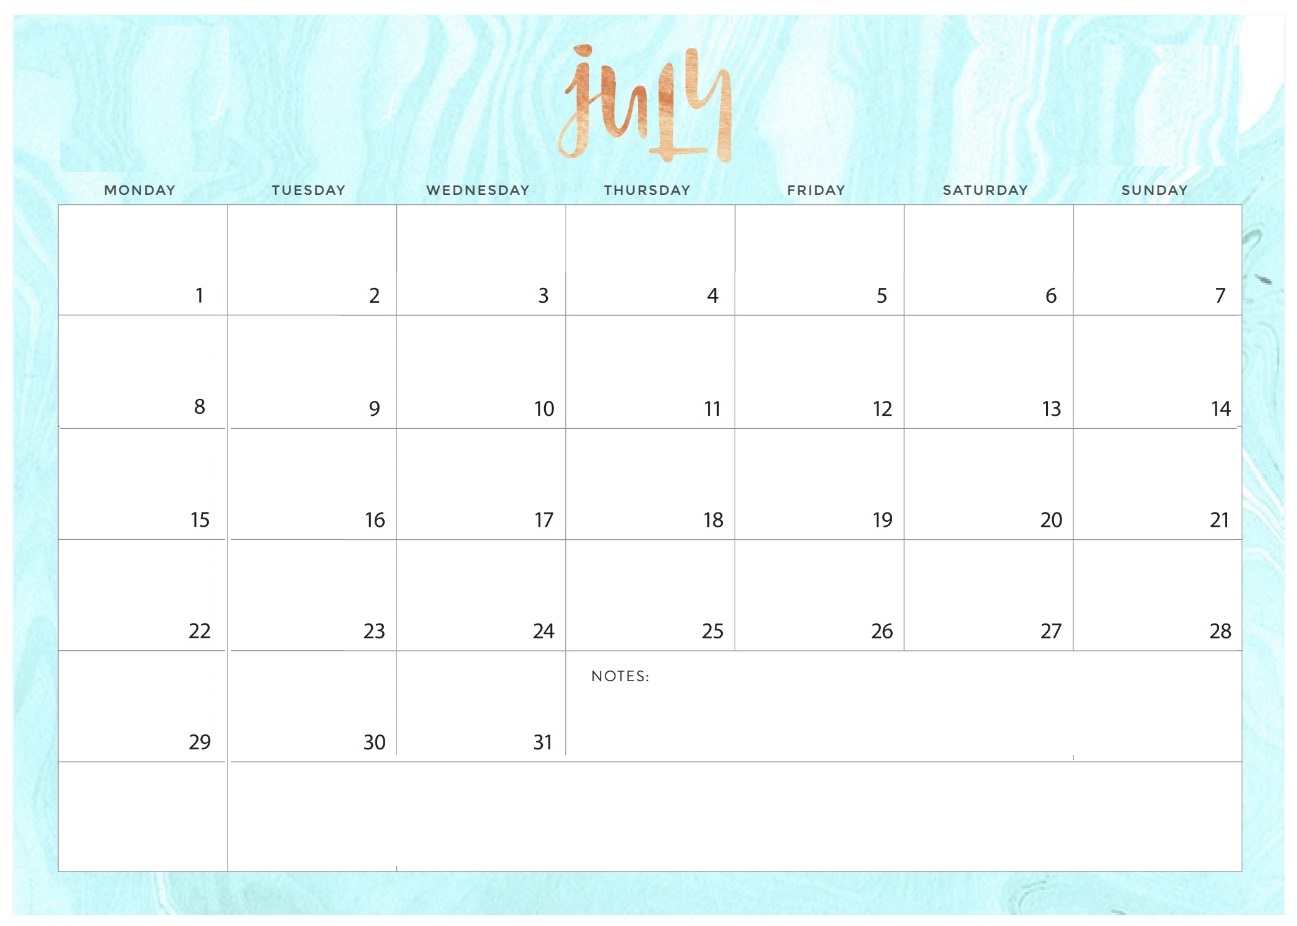 July 2019 Desk Calendar Designs